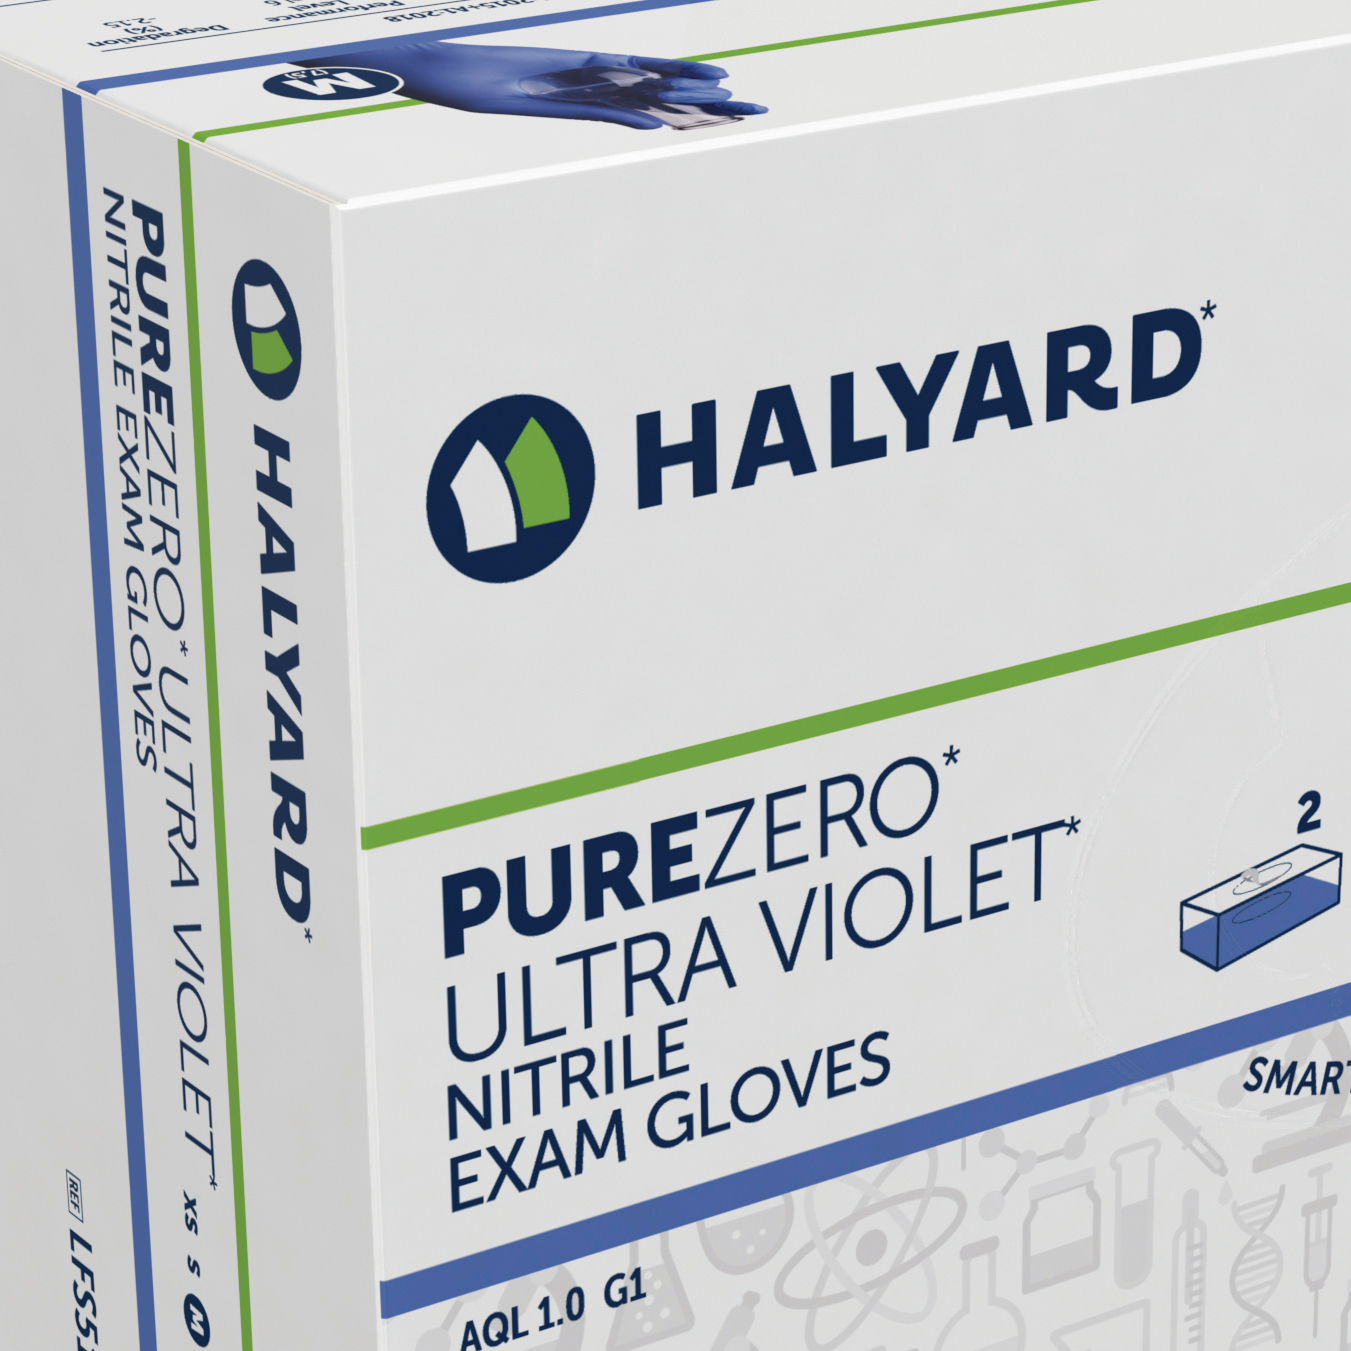 Halyard* glove box close-up